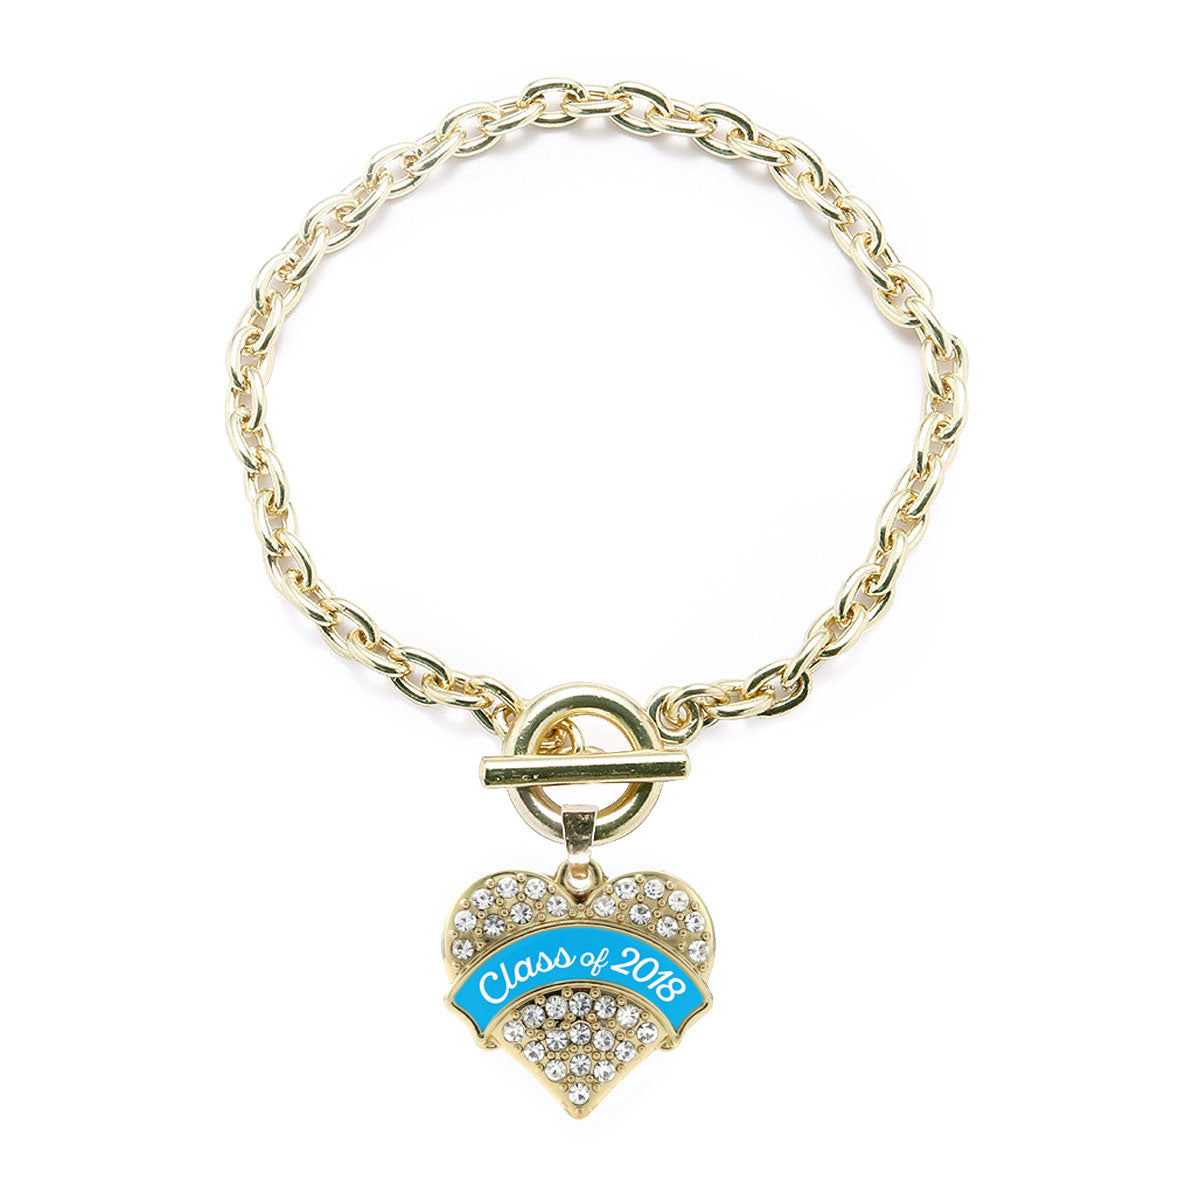 Gold Class of 2018 - Blue Pave Heart Charm Toggle Bracelet